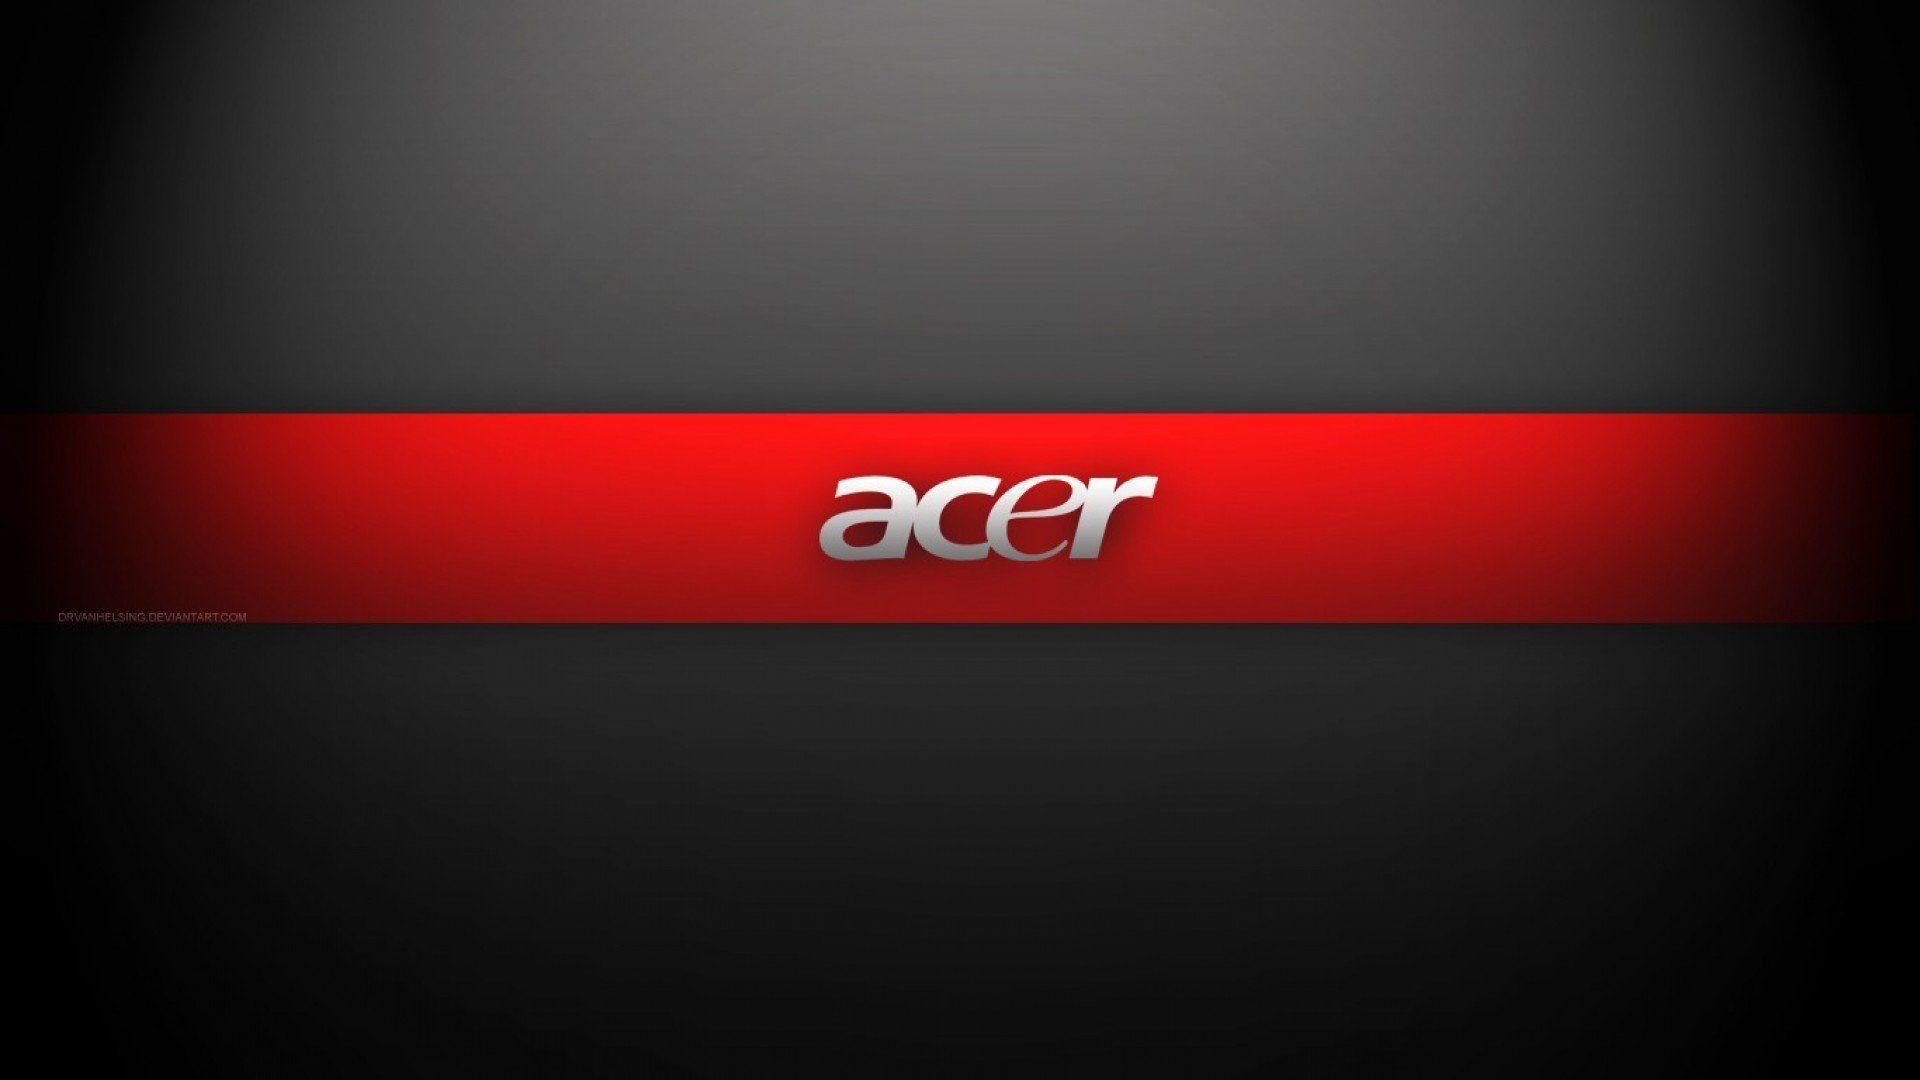 ACER ASPIRE PREDATOR GAMING desktop computer wallpapers